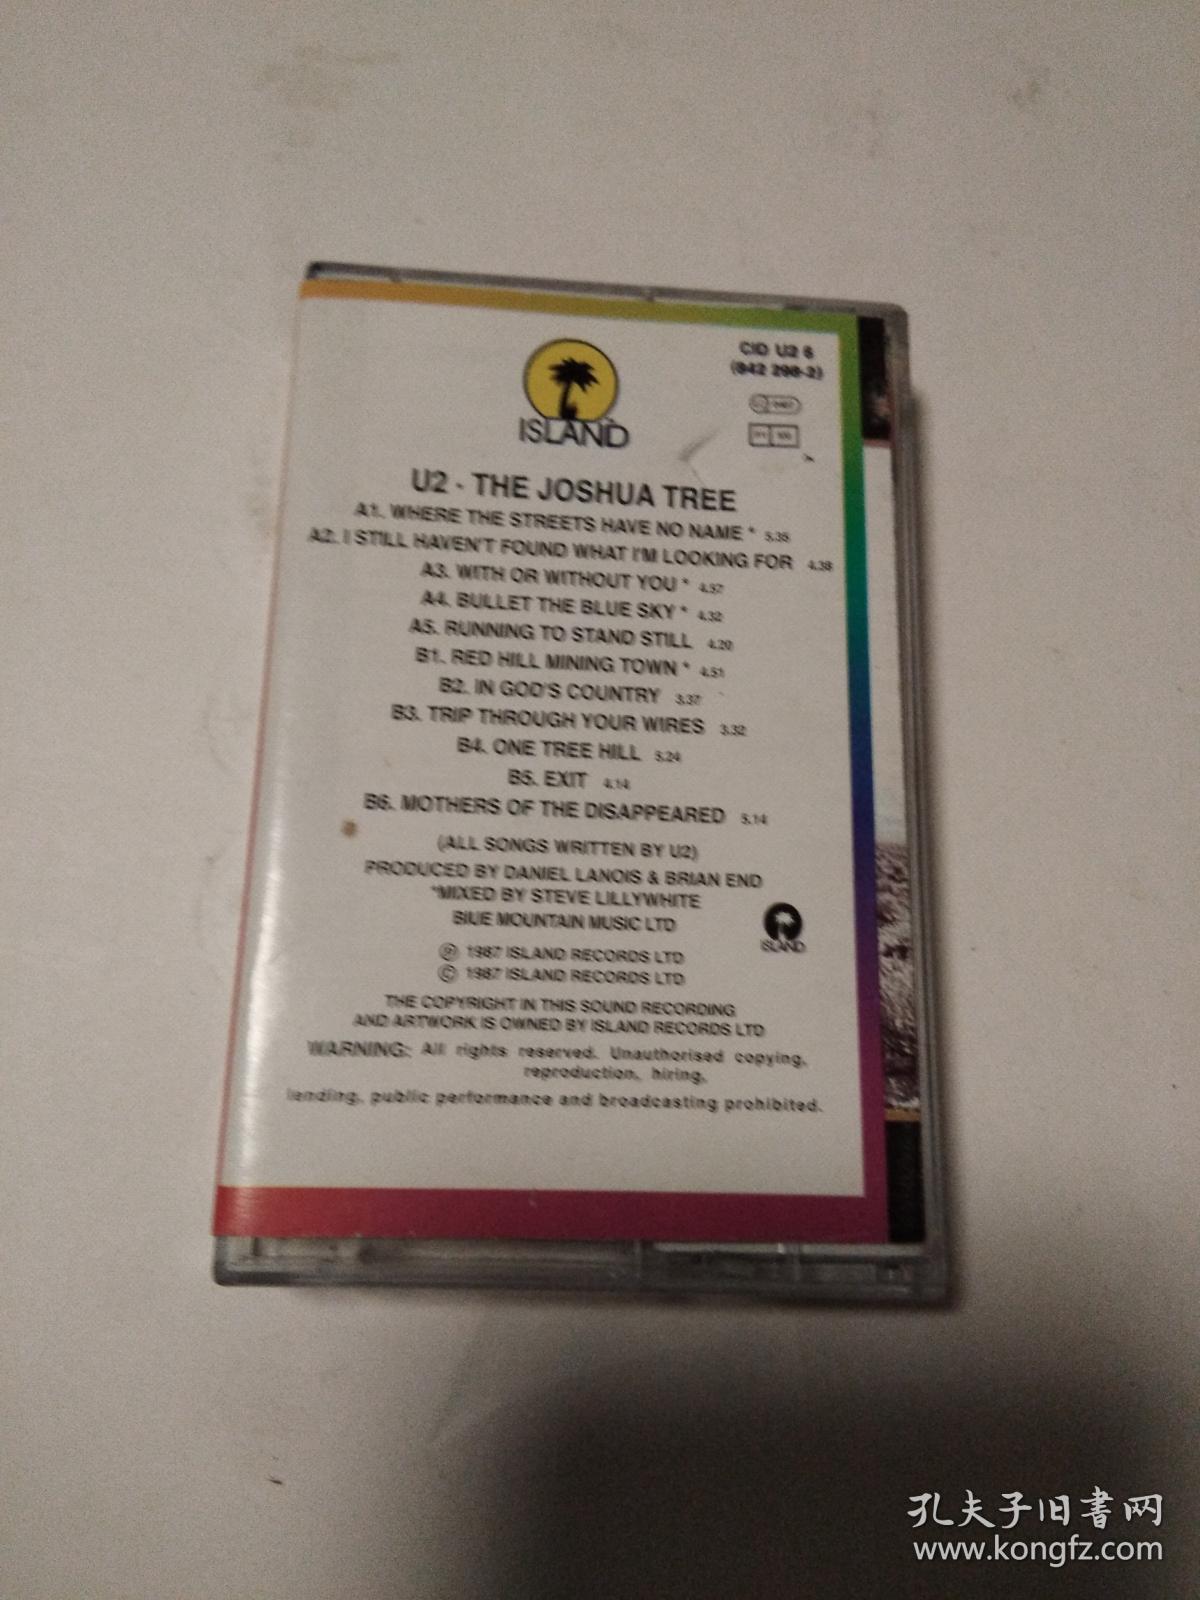 磁带 U2.THE JOSHUA TREE